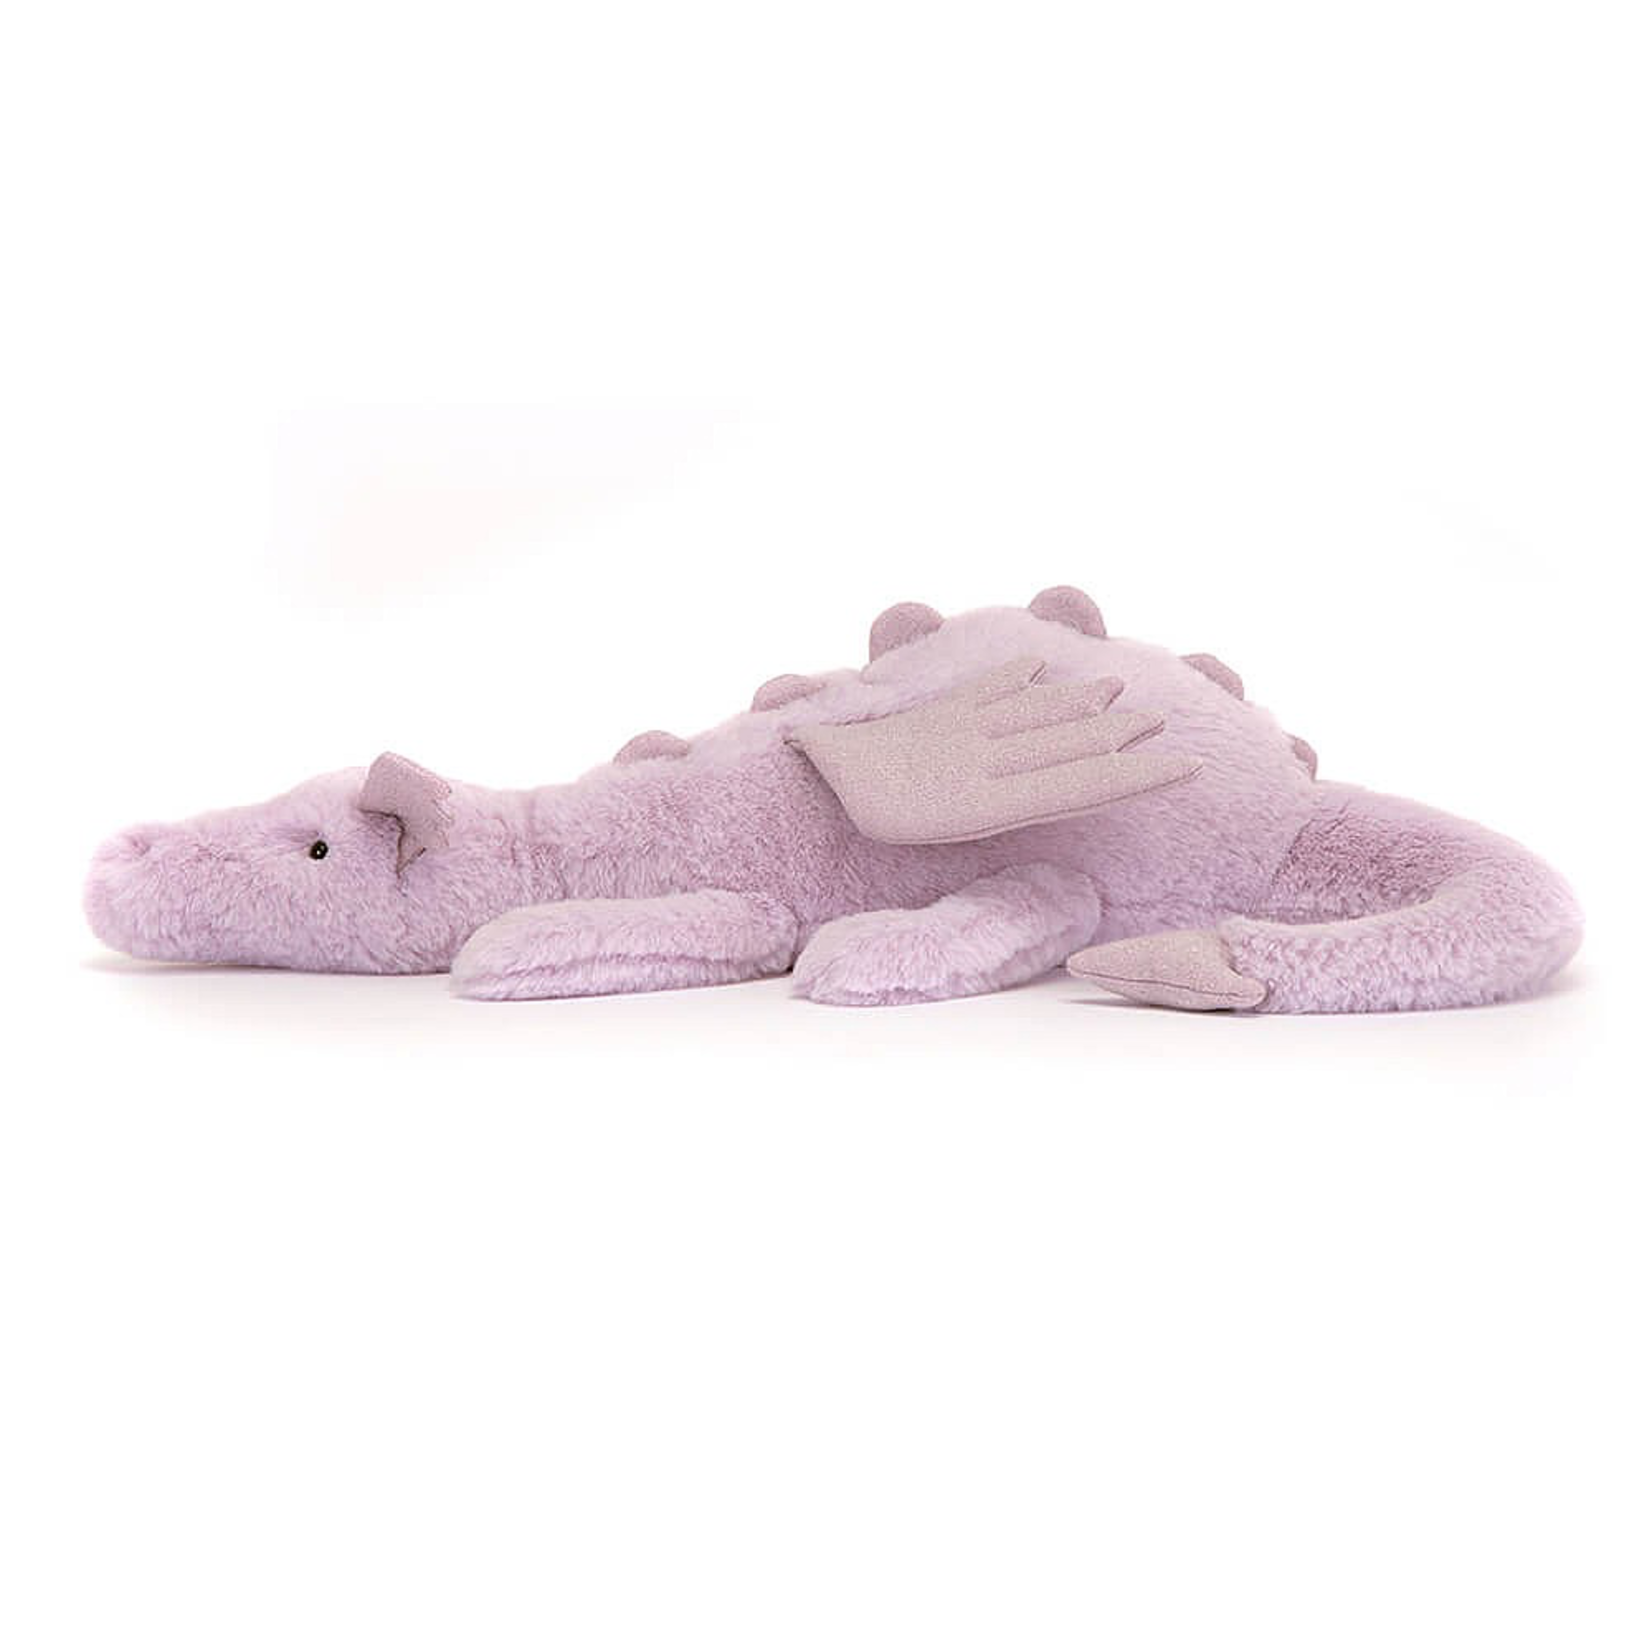 Jellycat - Beautifully Scrumptious Jellycat - Lavender Dragon - Medium